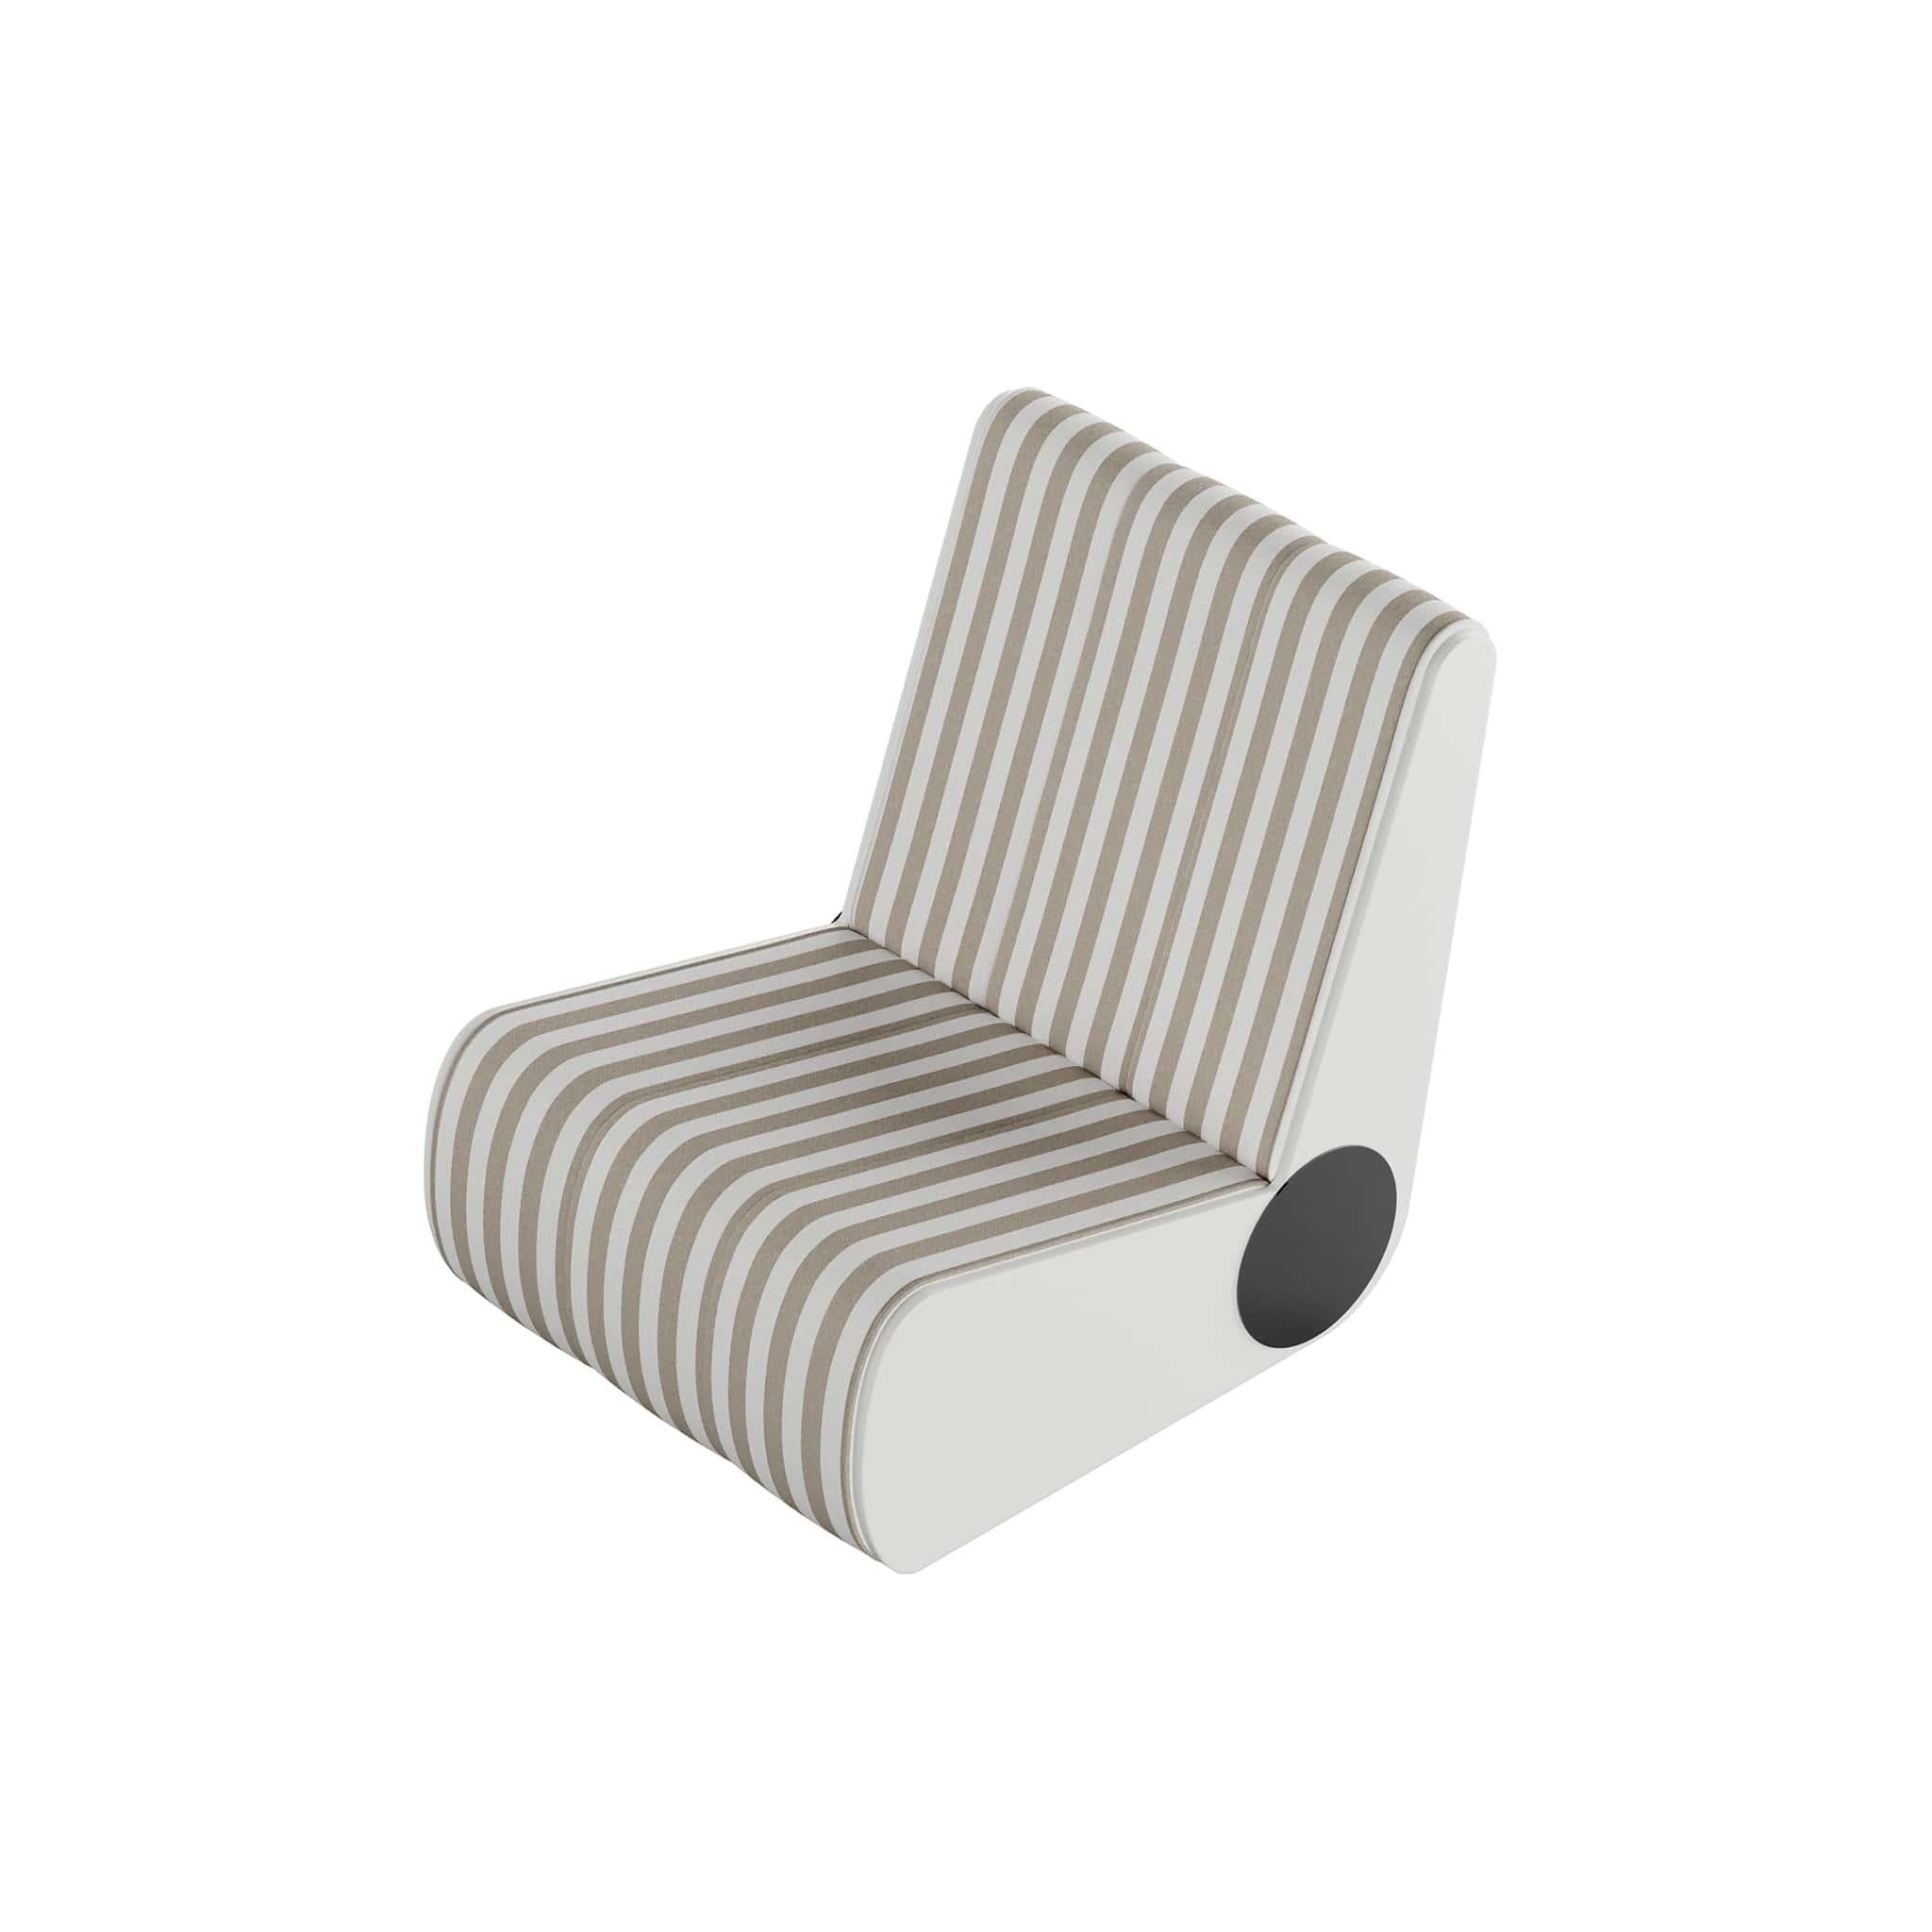 Portuguese Modern Outdoor Folding Sun Lounge Chair Beige White Stripes & Golden Details For Sale